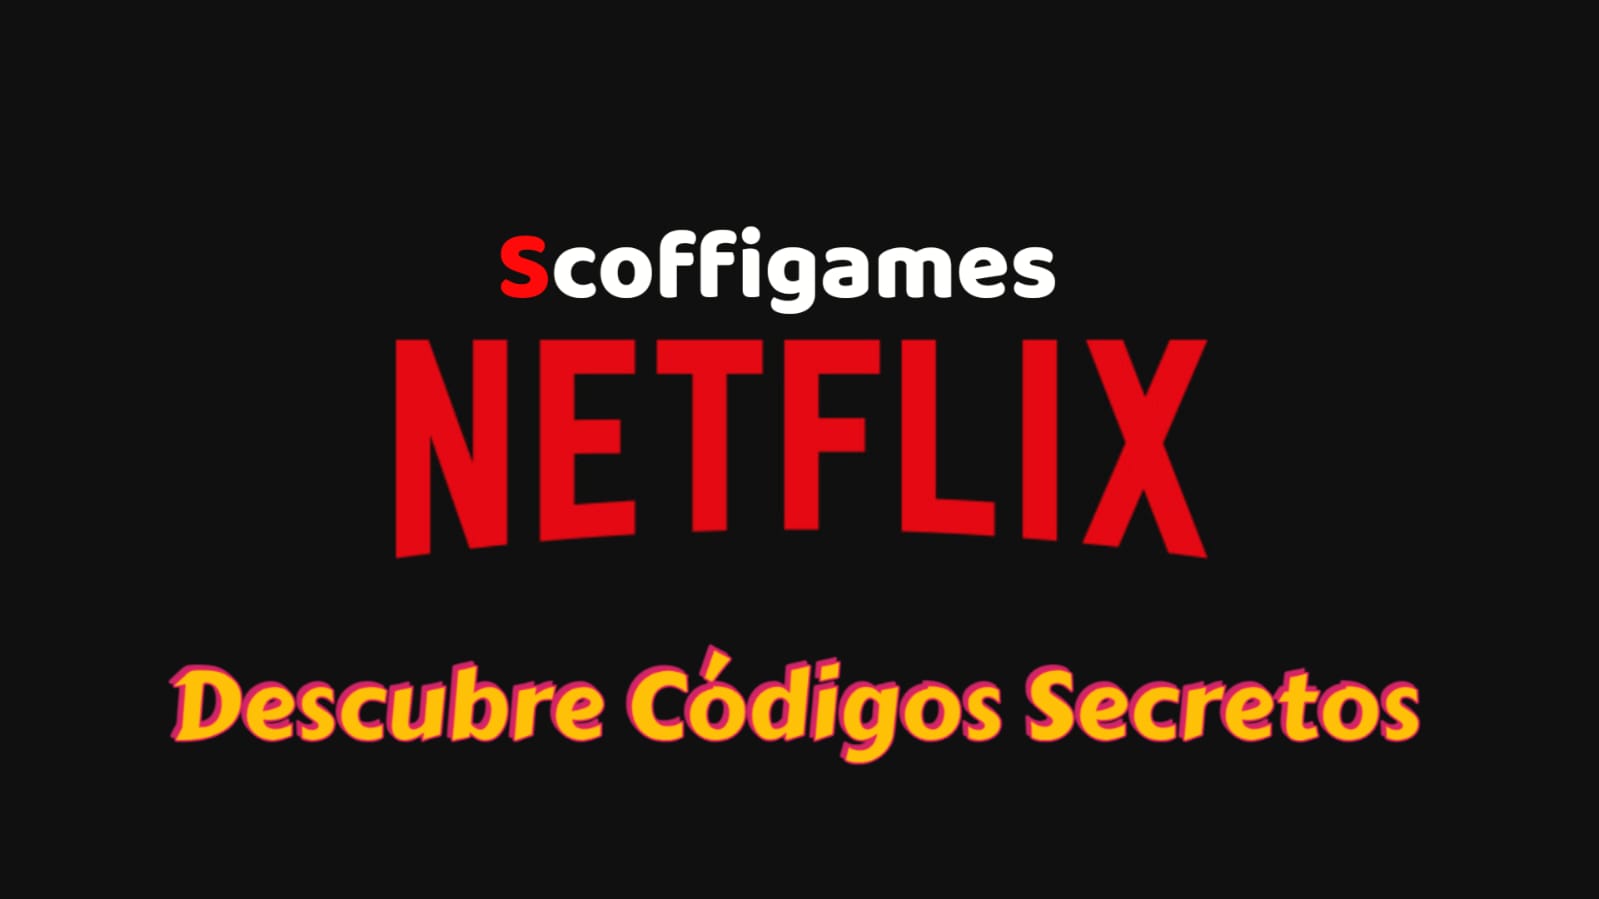 Códigos Secretos en Netflix